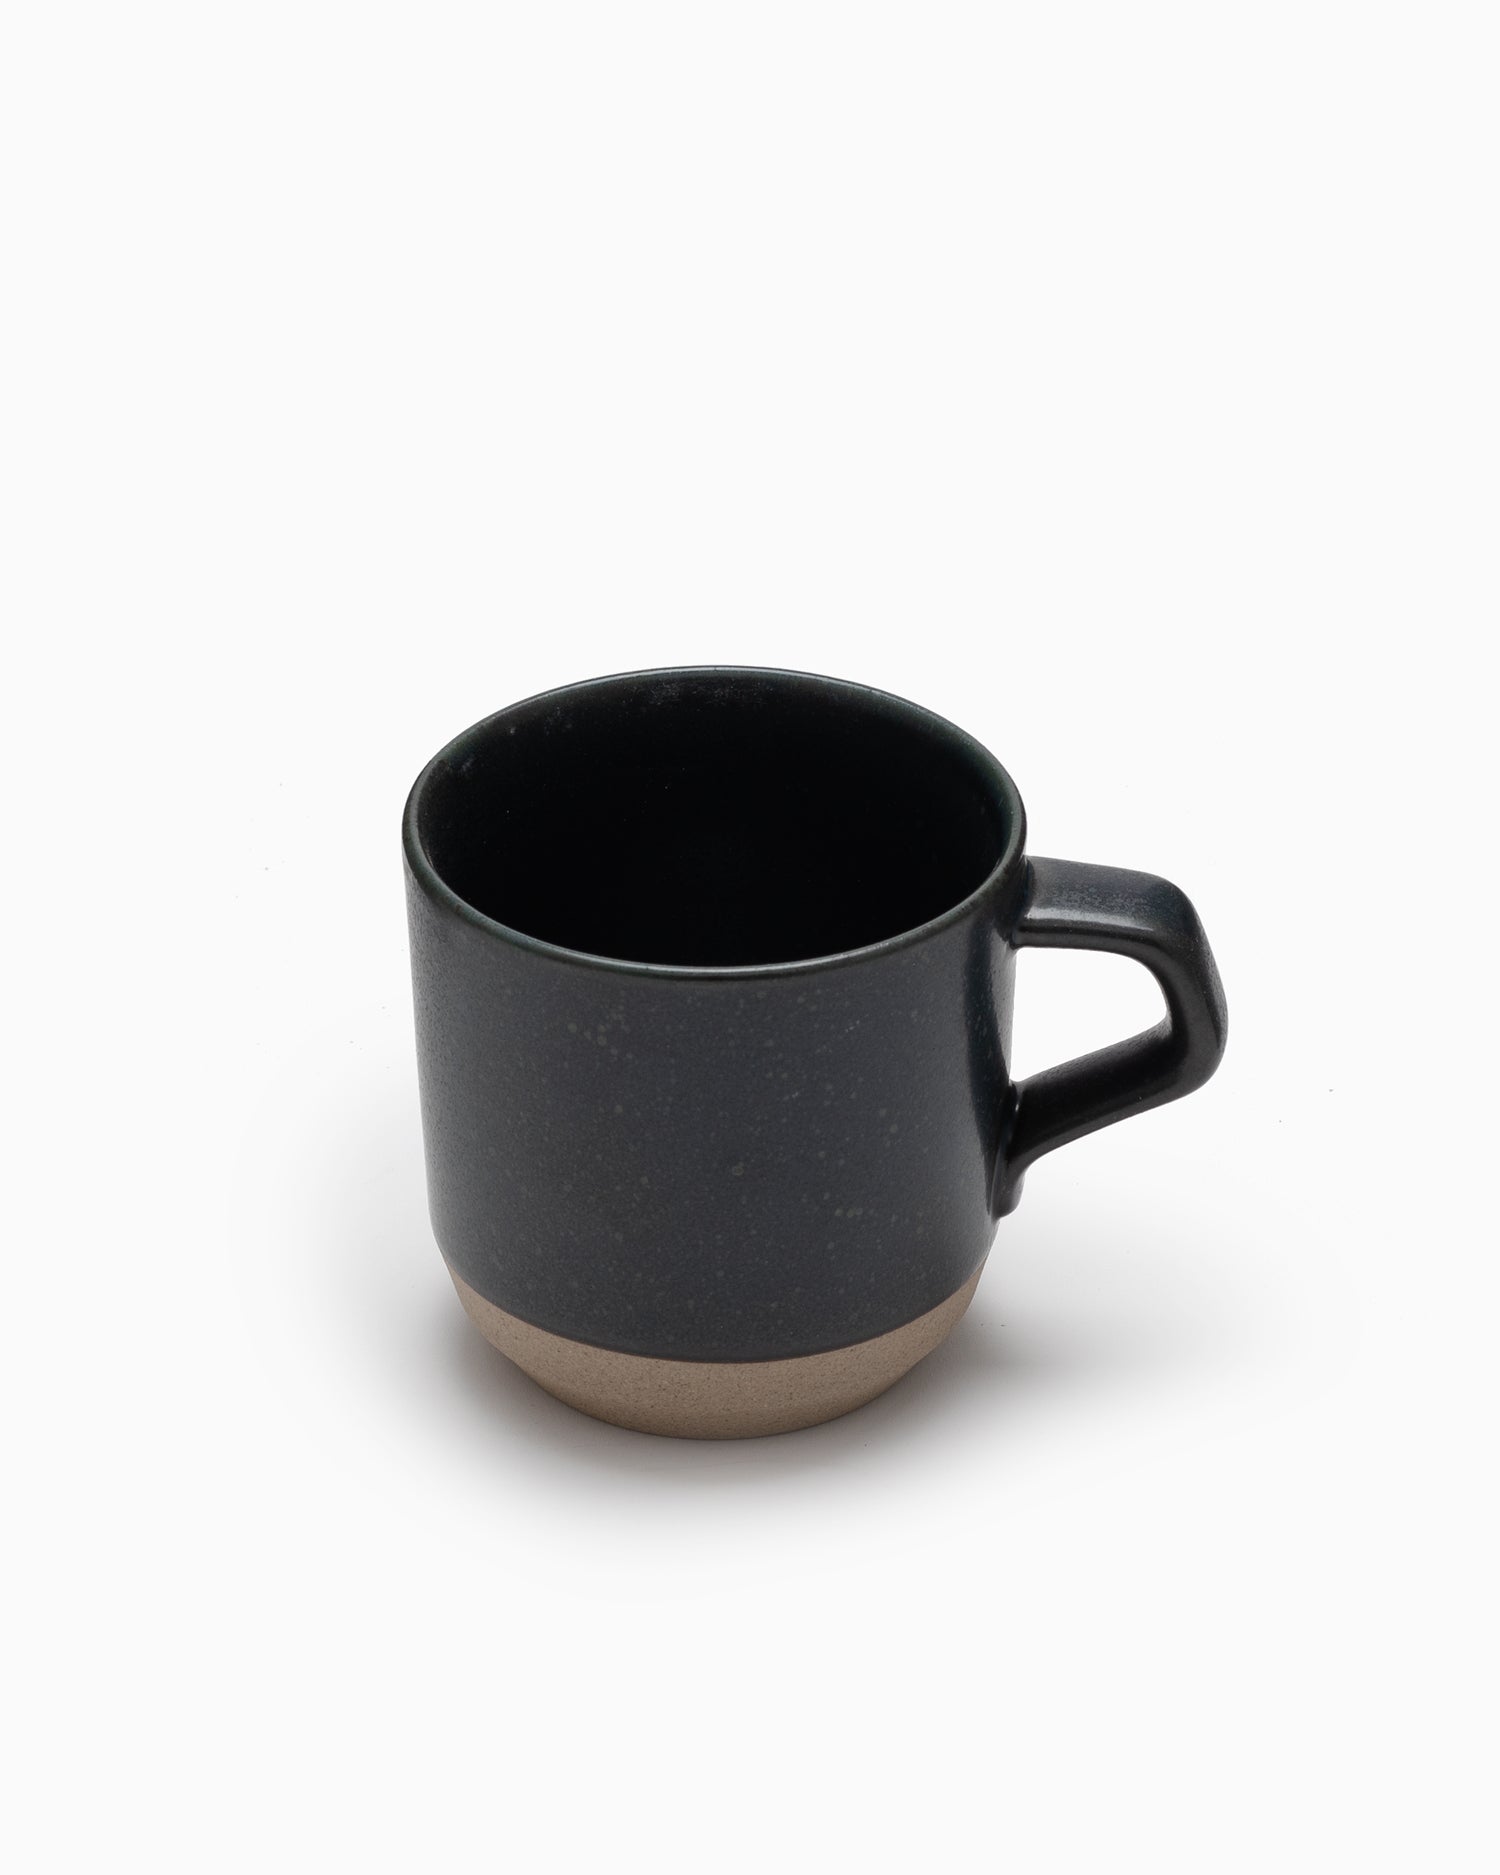 CLK-151 Small Mug - Black